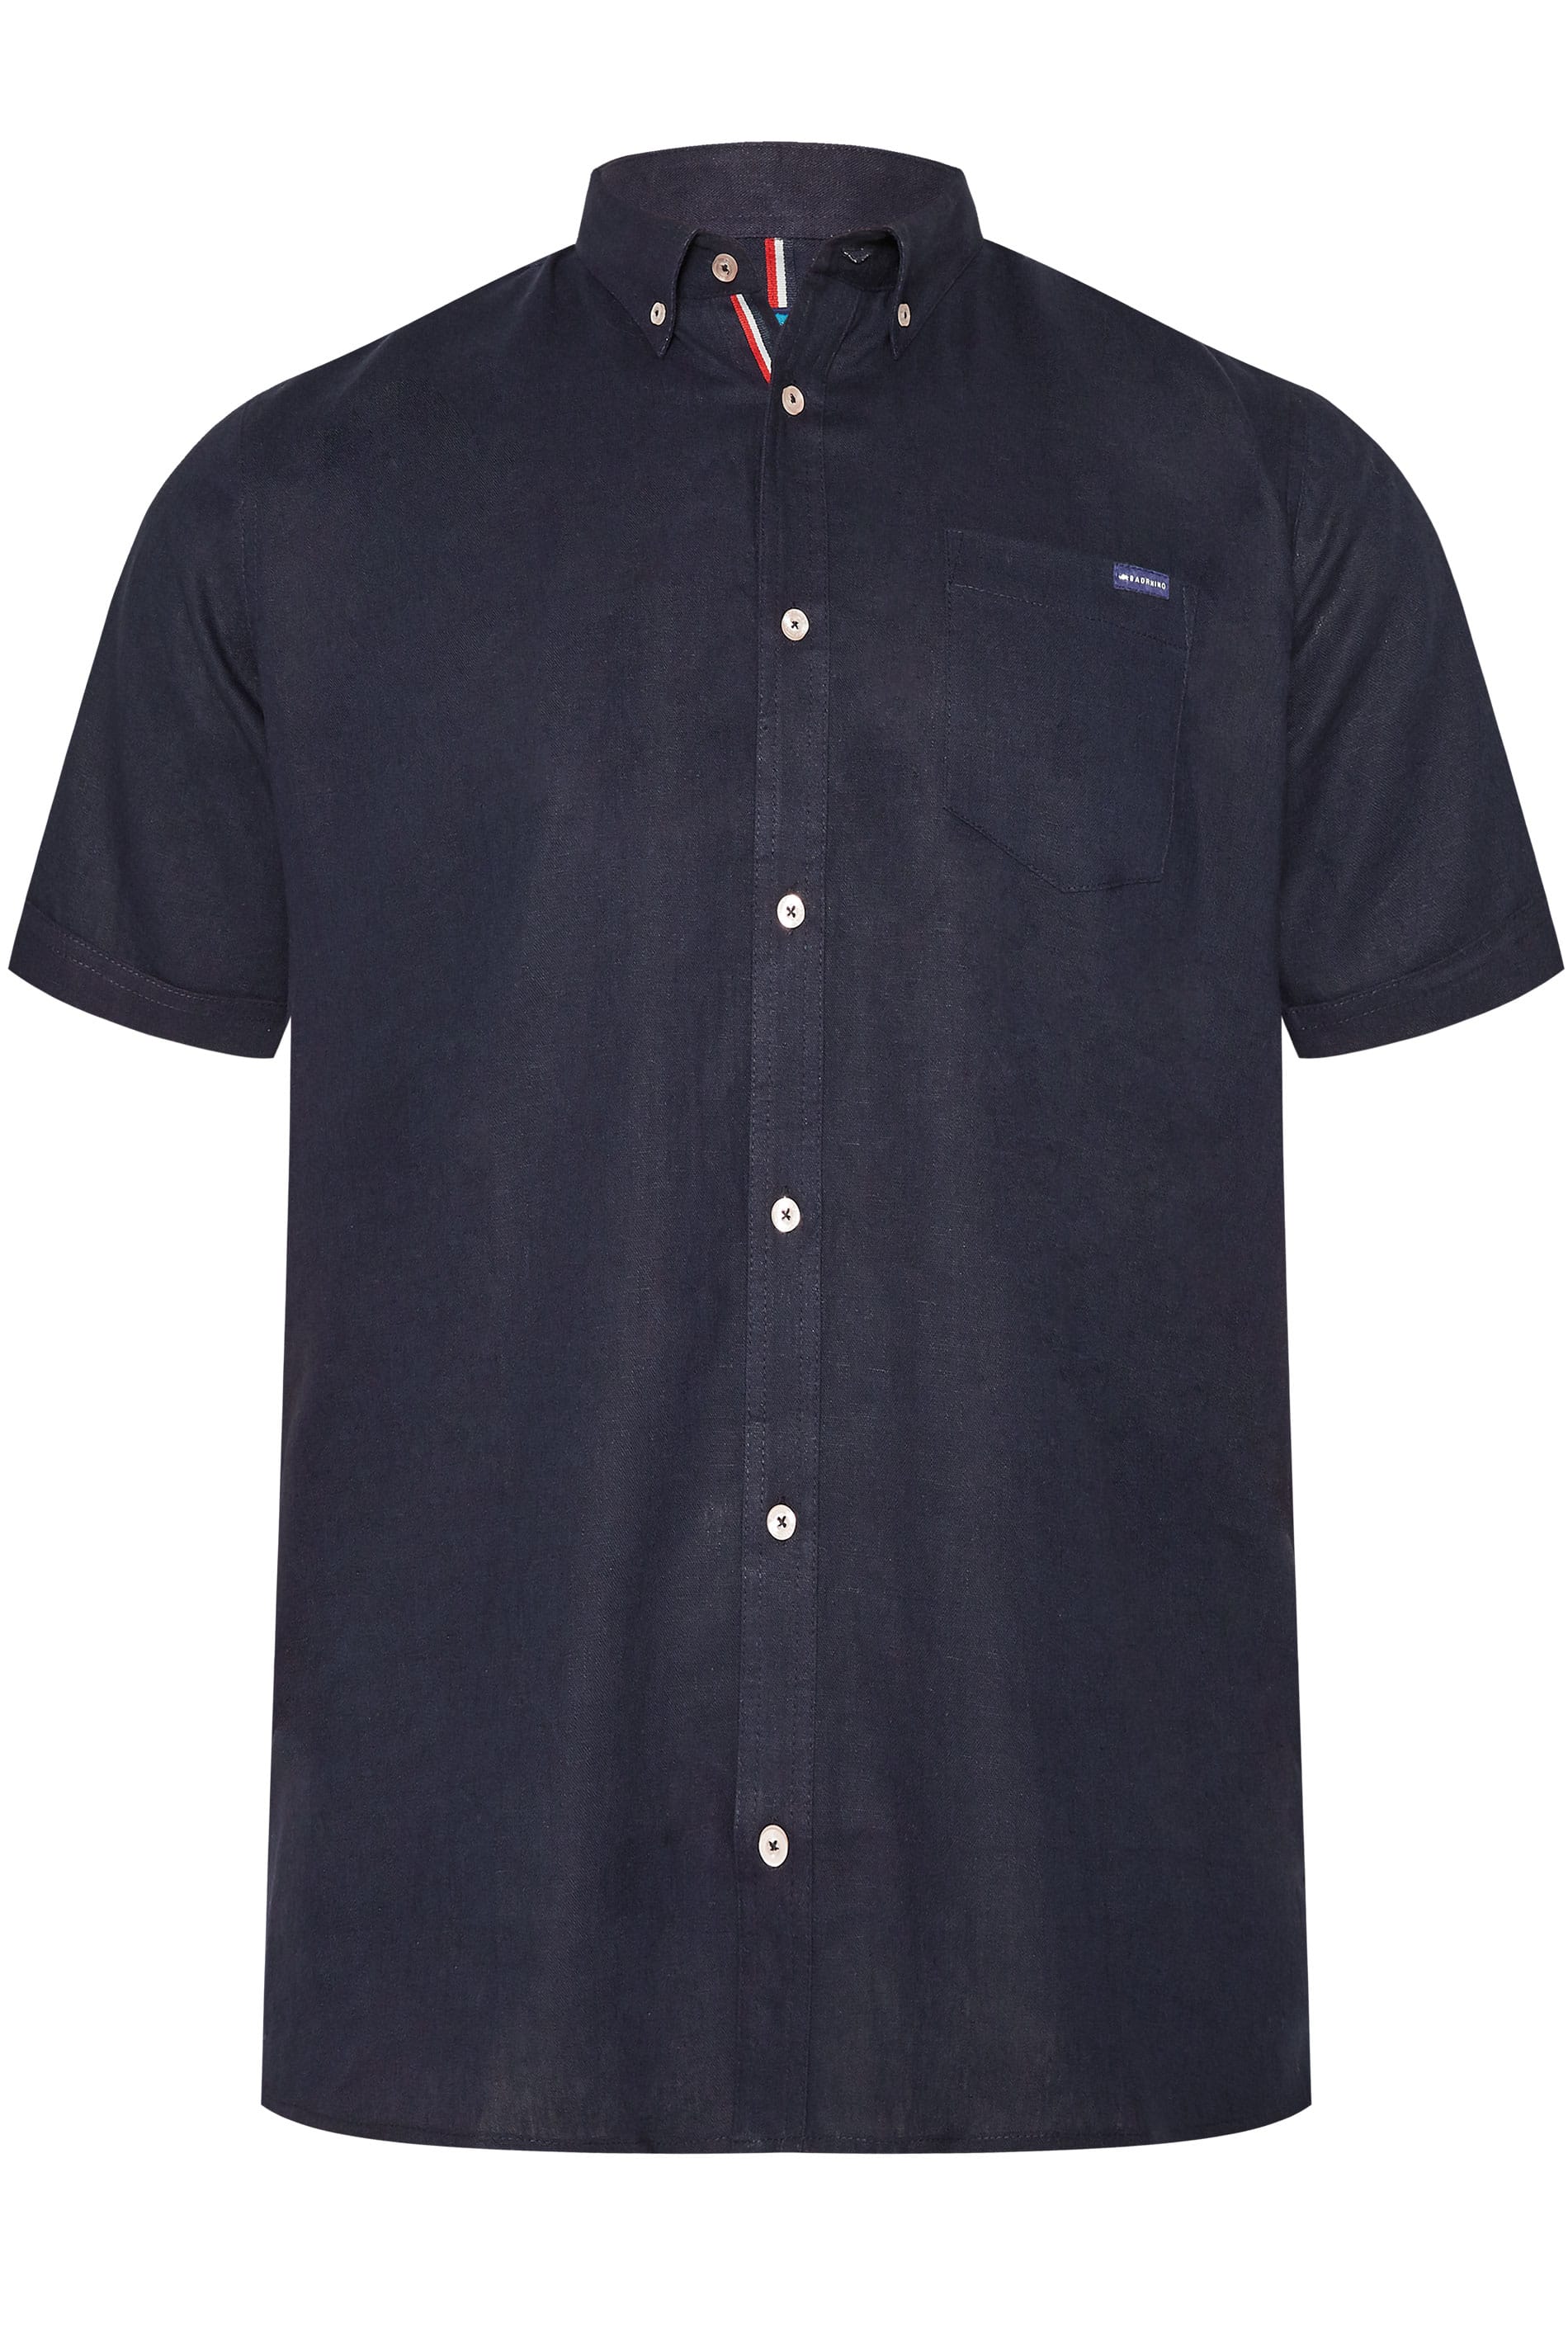 BadRhino Big & Tall Navy Blue Linen Mix Shirt_77f0.jpg